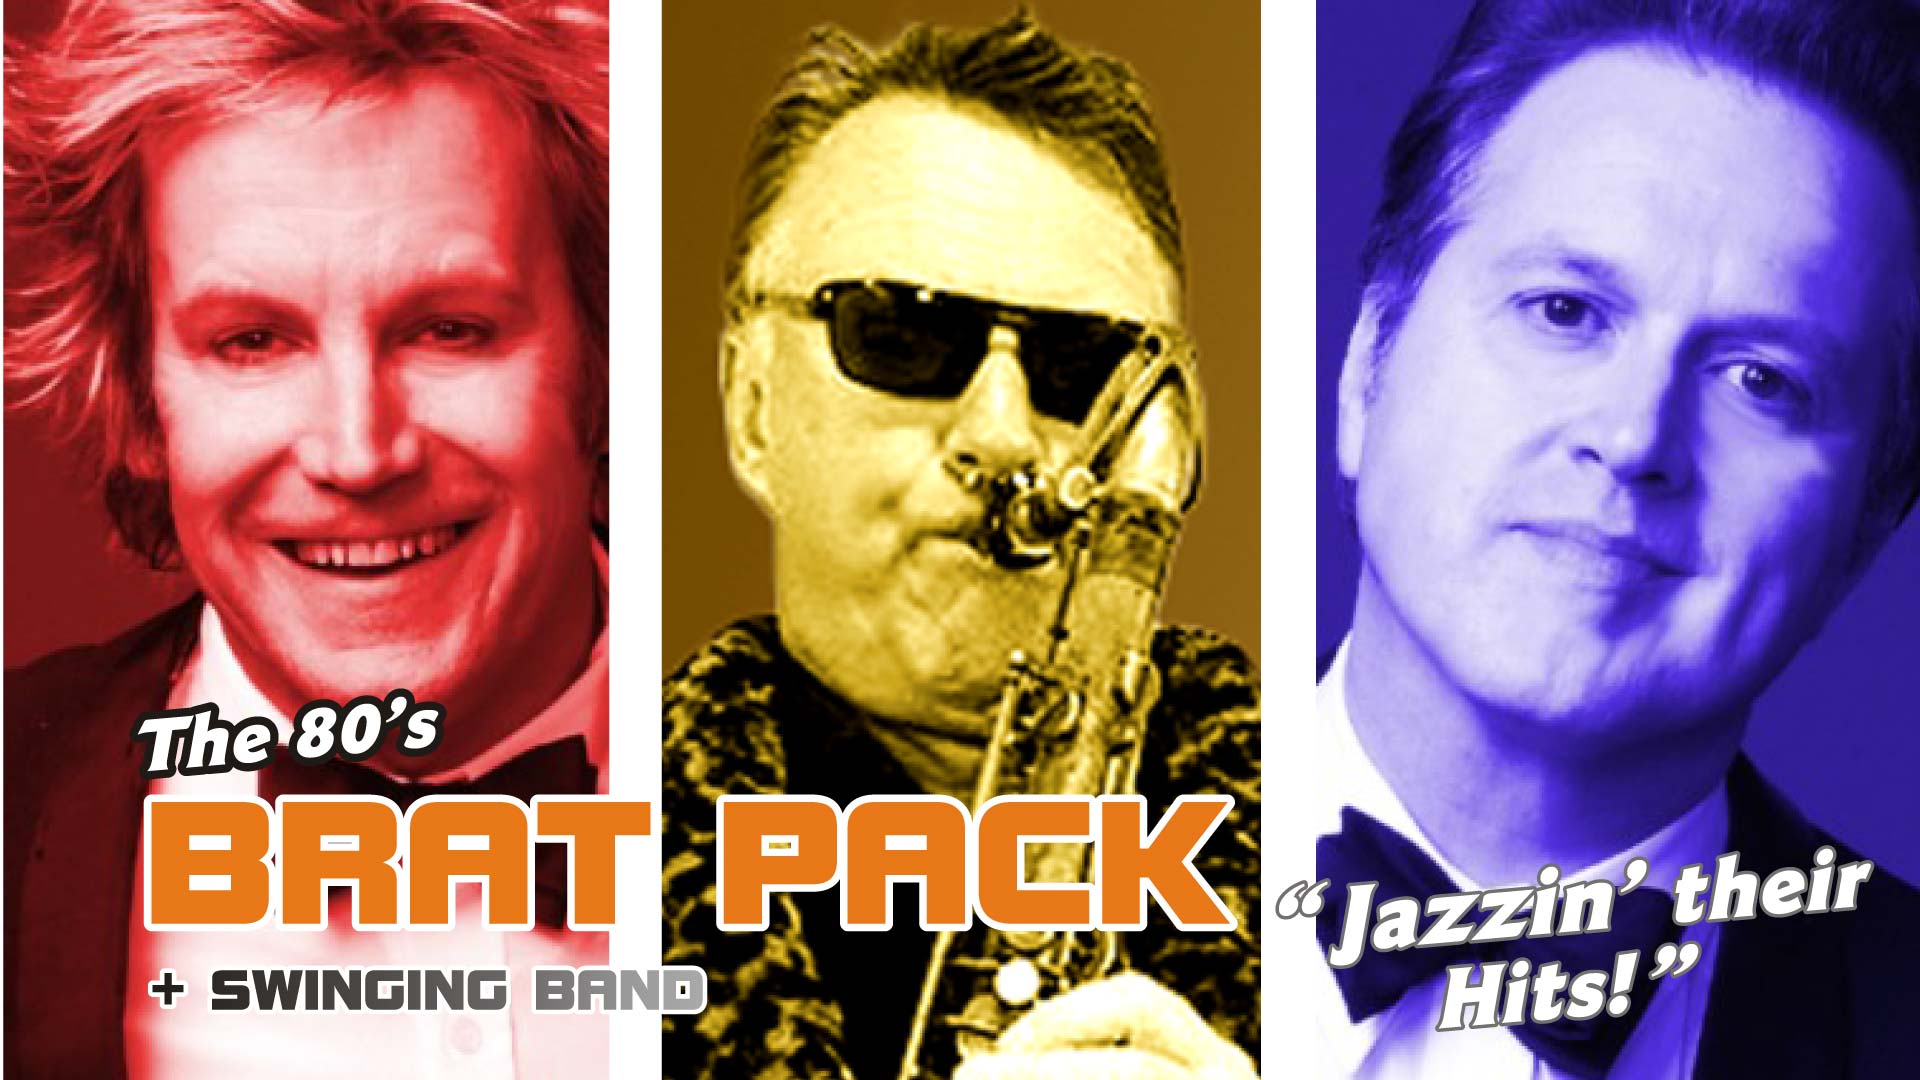 The 80s Brat Pack. Brian Mannix, Wilbur Wilde and Scott Carne, jazzin' their hits.